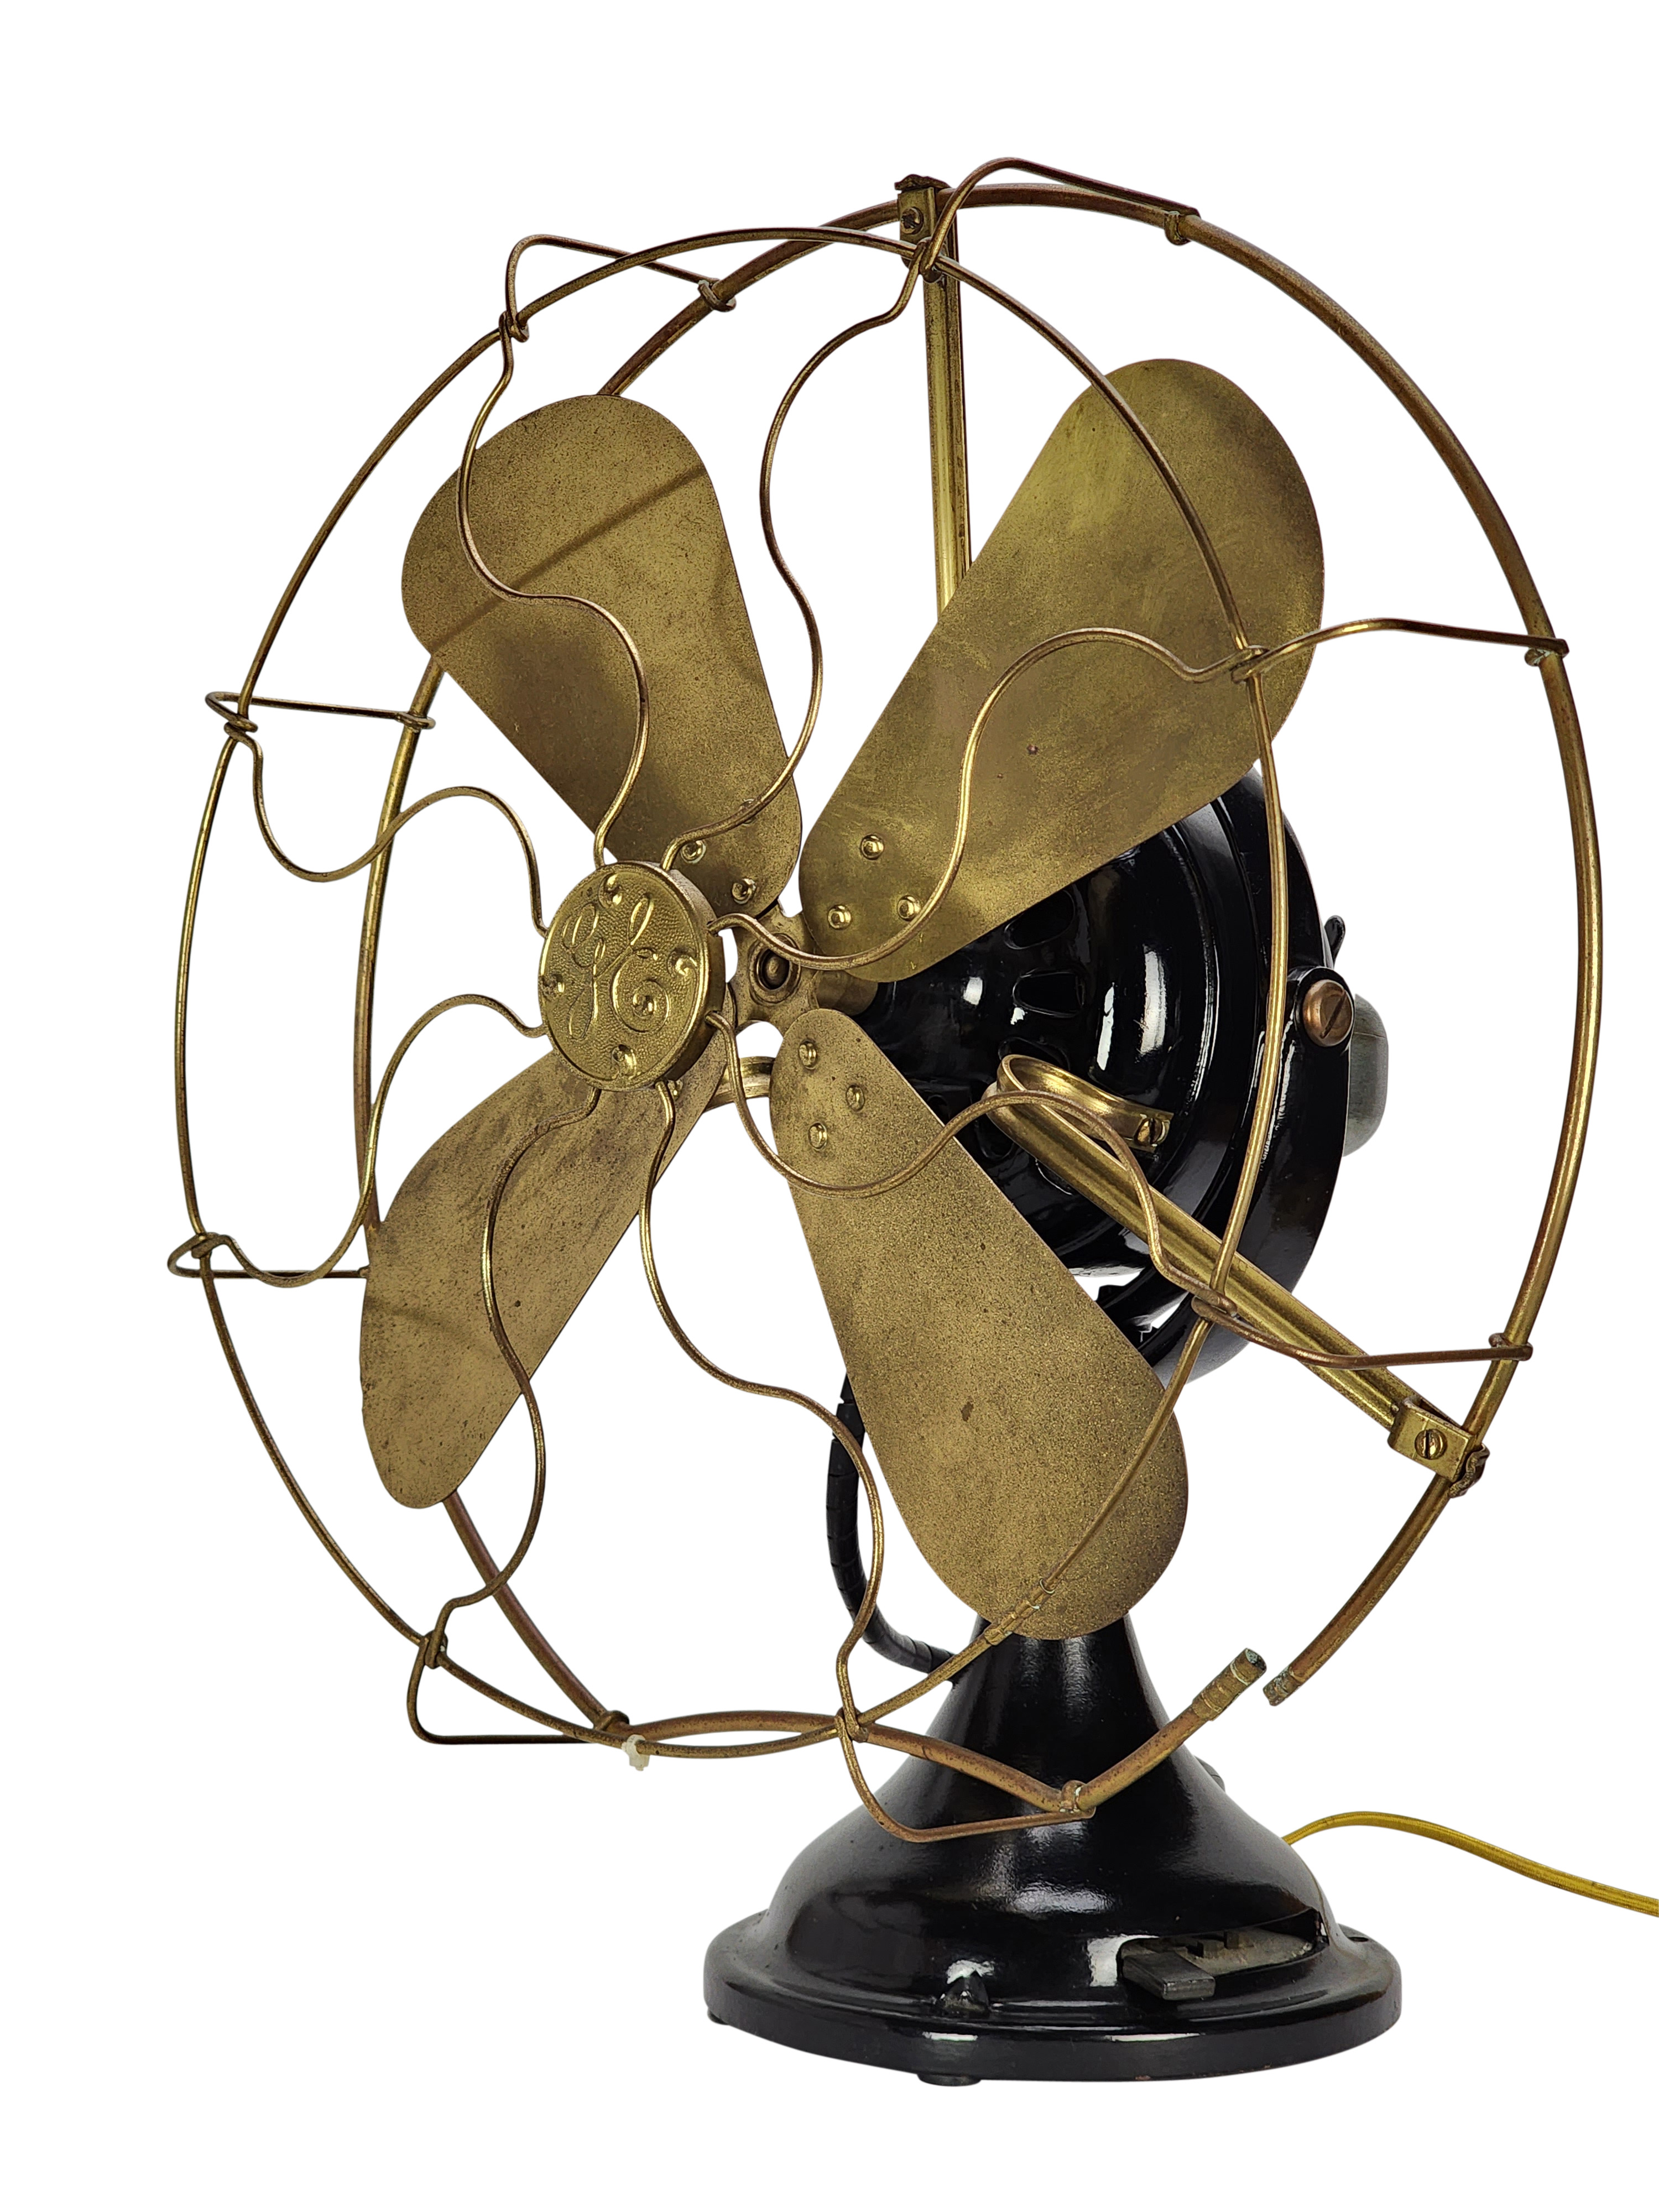 Circa 1911 16" GE Kidney Oscillating Desk Fan